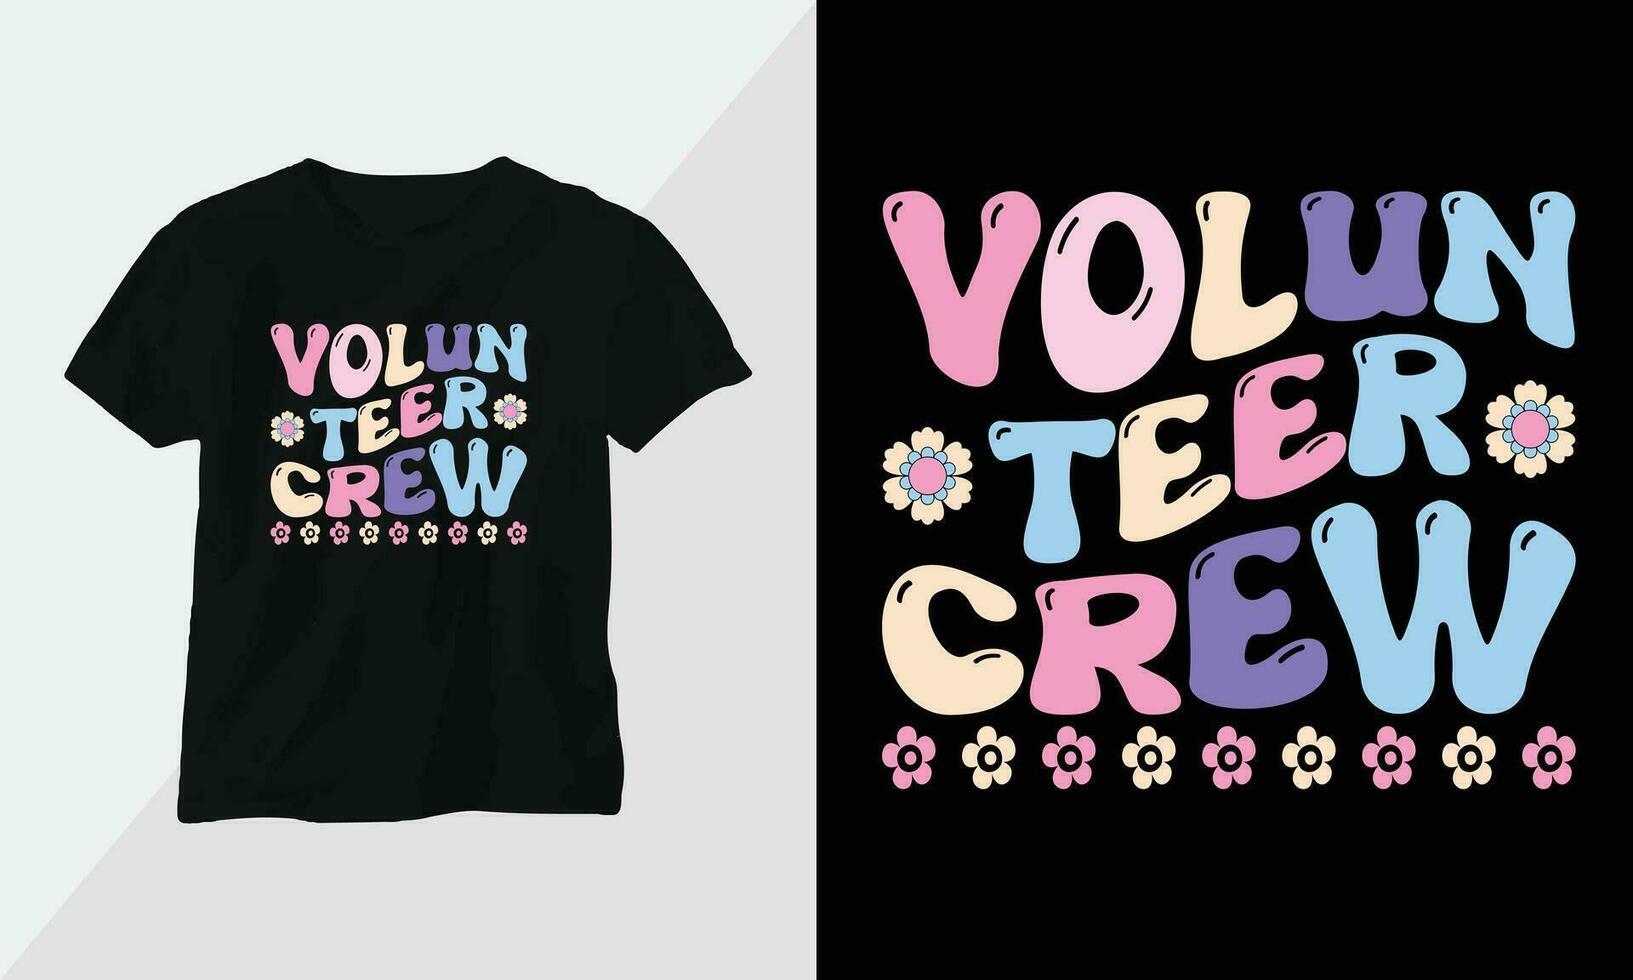 volunteer crew - Retro Groovy Inspirational T-shirt Design with retro style vector